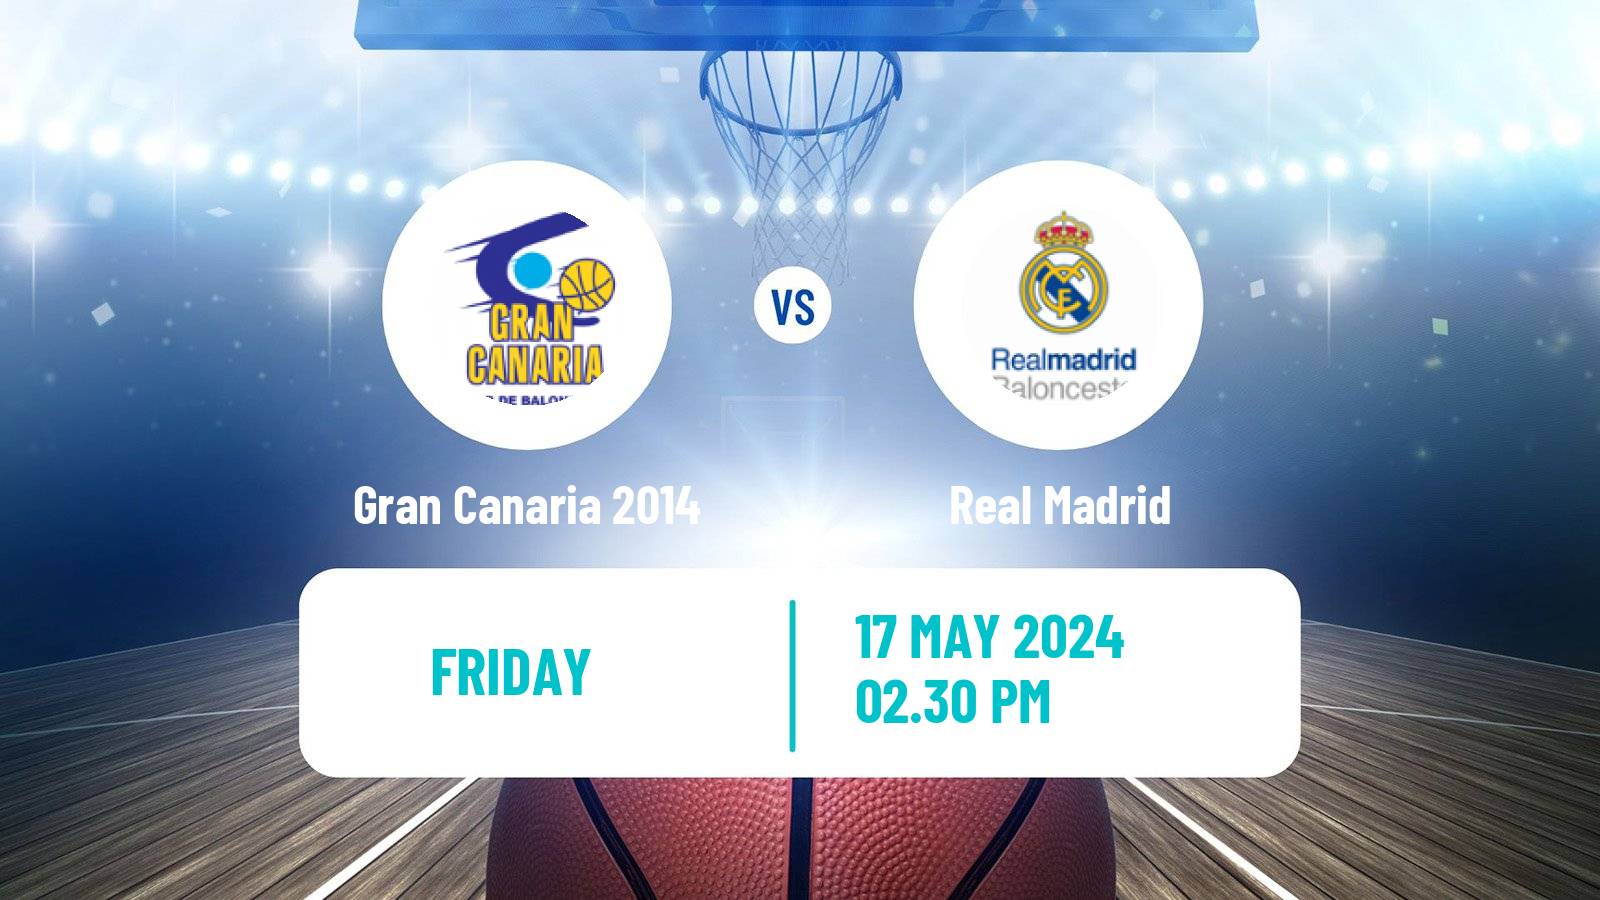 Basketball Spanish ACB League Gran Canaria 2014 - Real Madrid